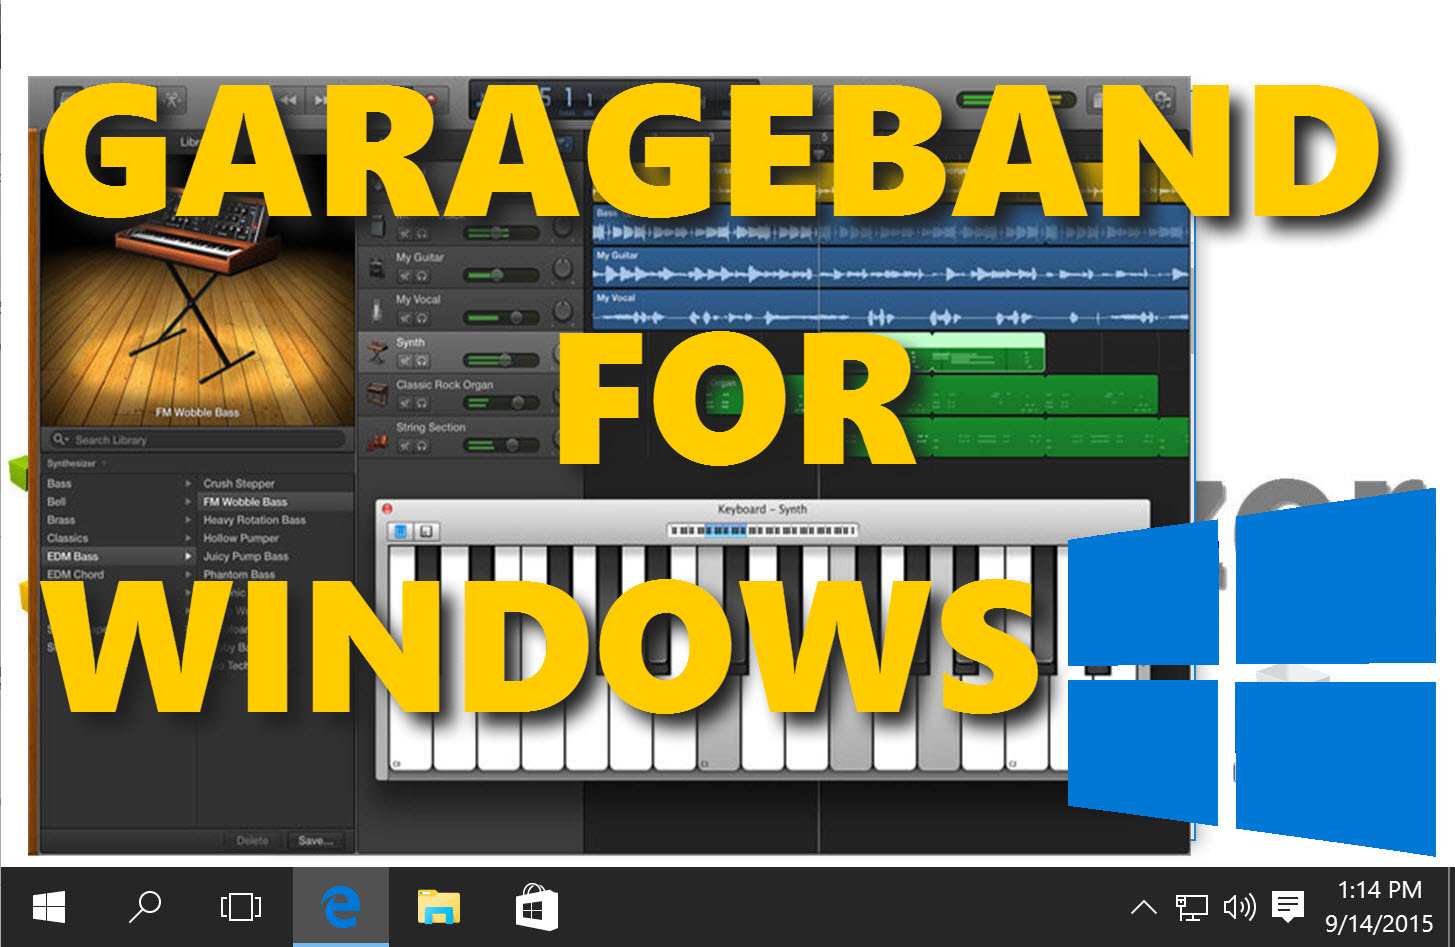 garageband for windows 8.1 free download